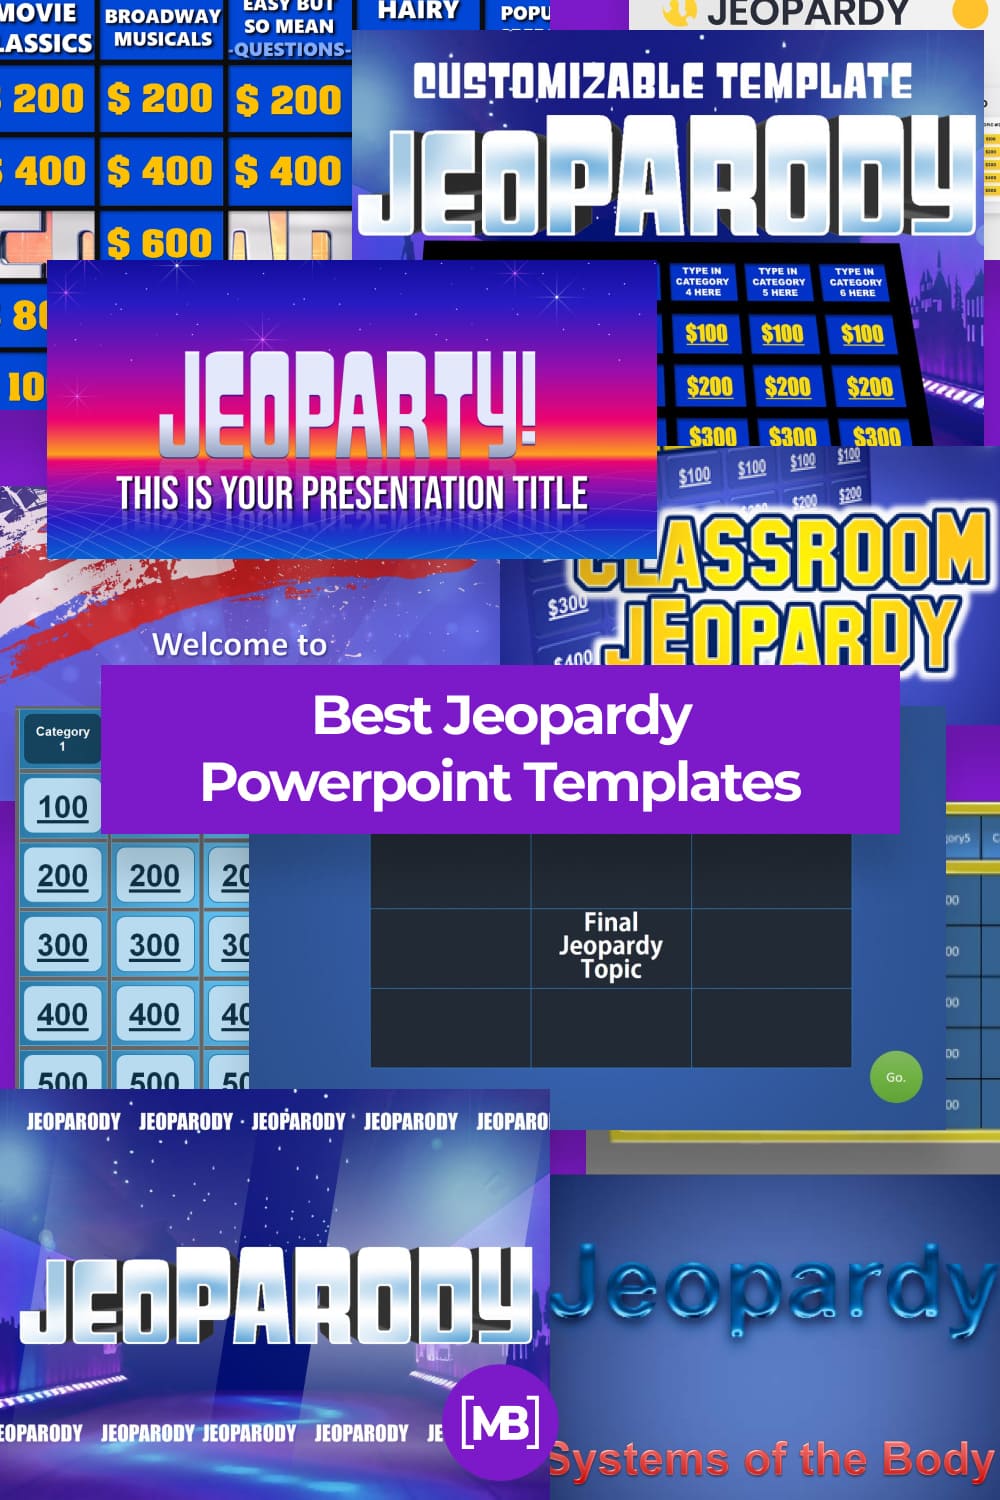 Best Jeopardy Powerpoint Templates Pinterest.